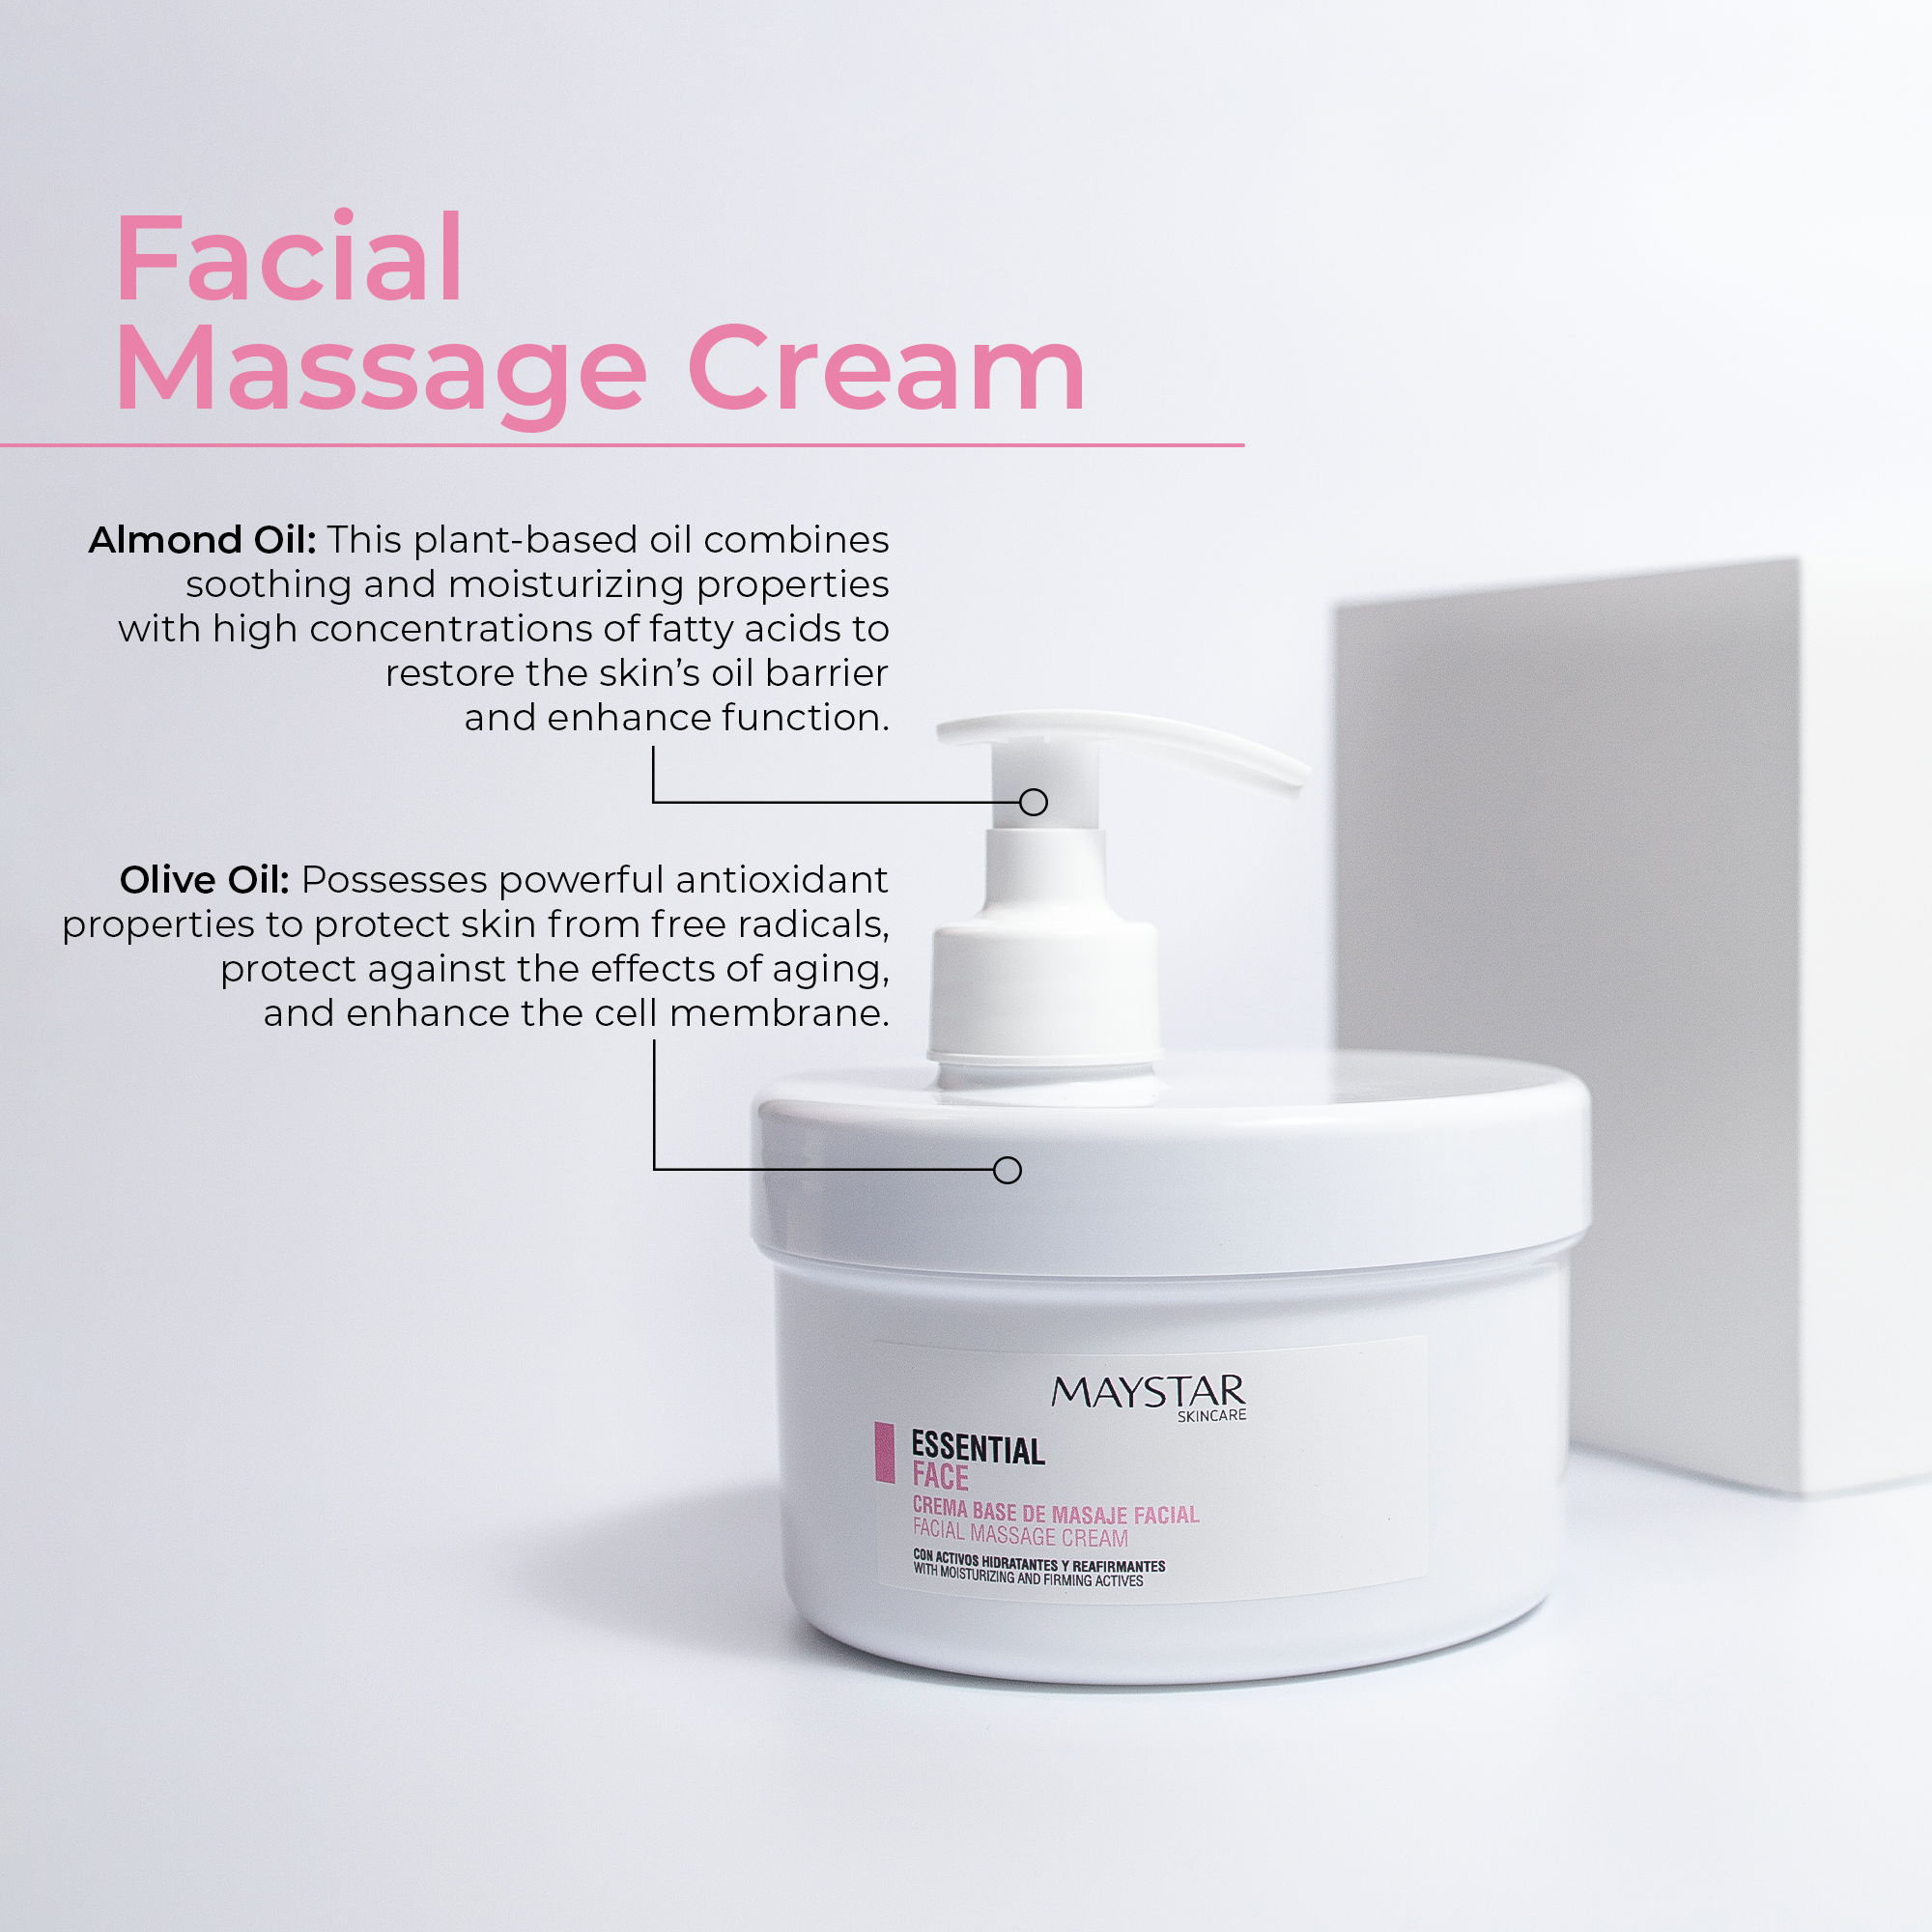 Facial Massage Cream - Maystar Essential